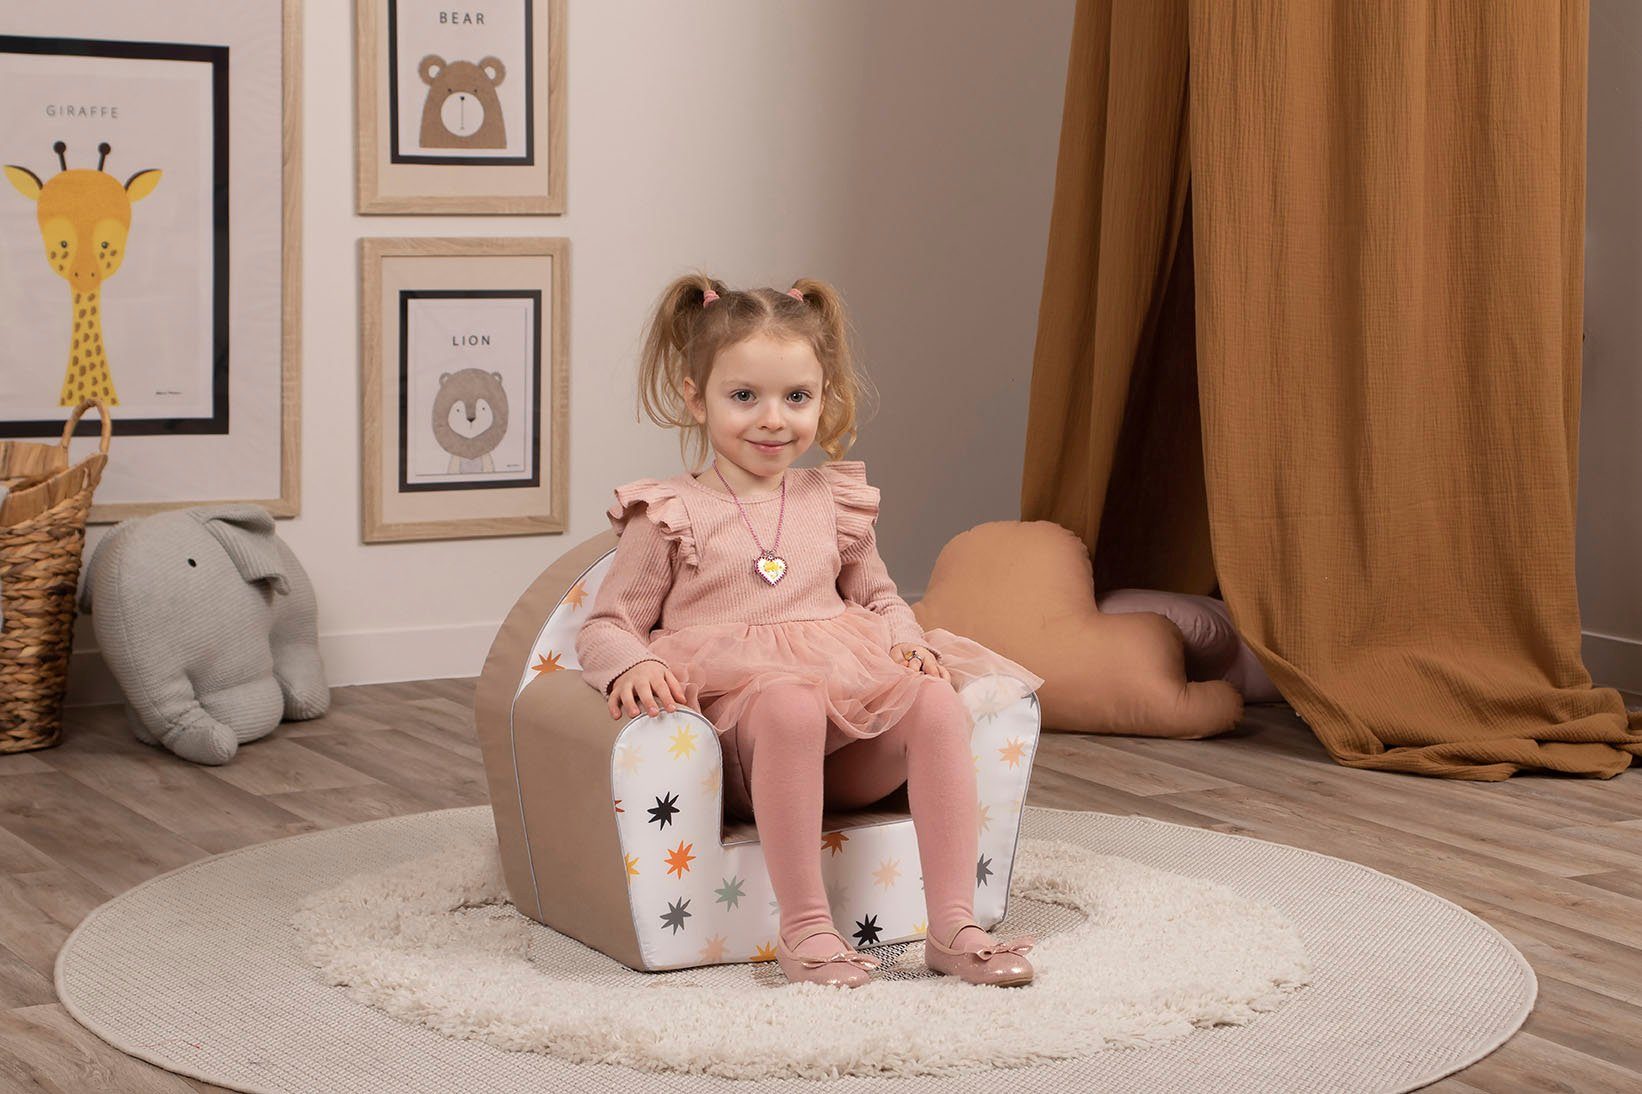 Knorrtoys® Sessel Pastell Kinder; Stars, für Made Europe in